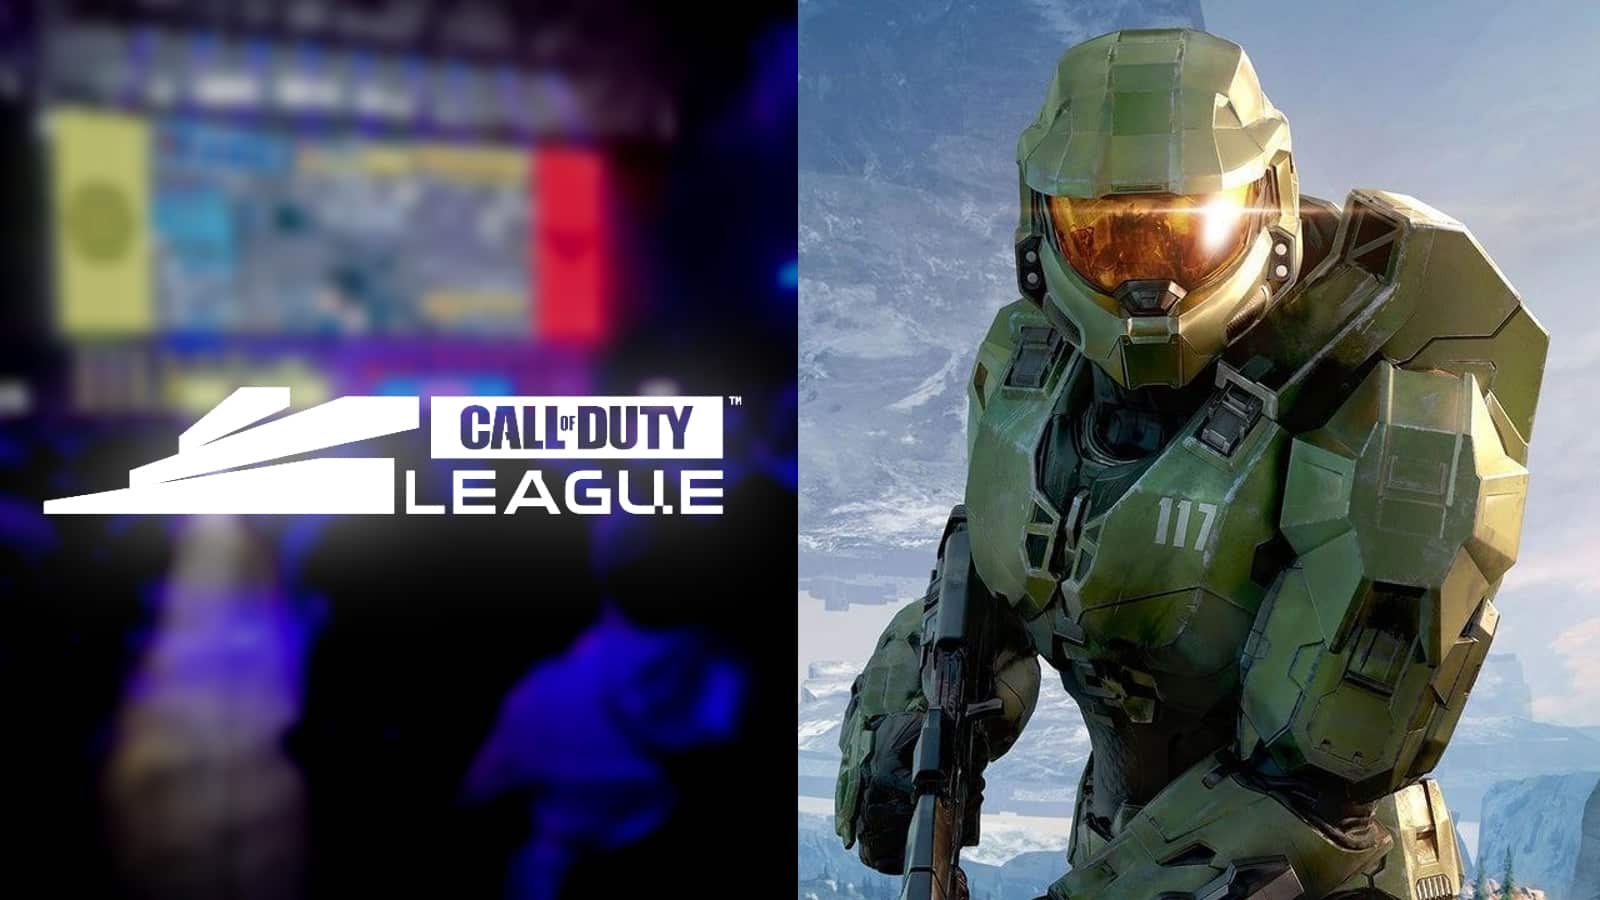 Halo Infinite and Call of Duty League logo